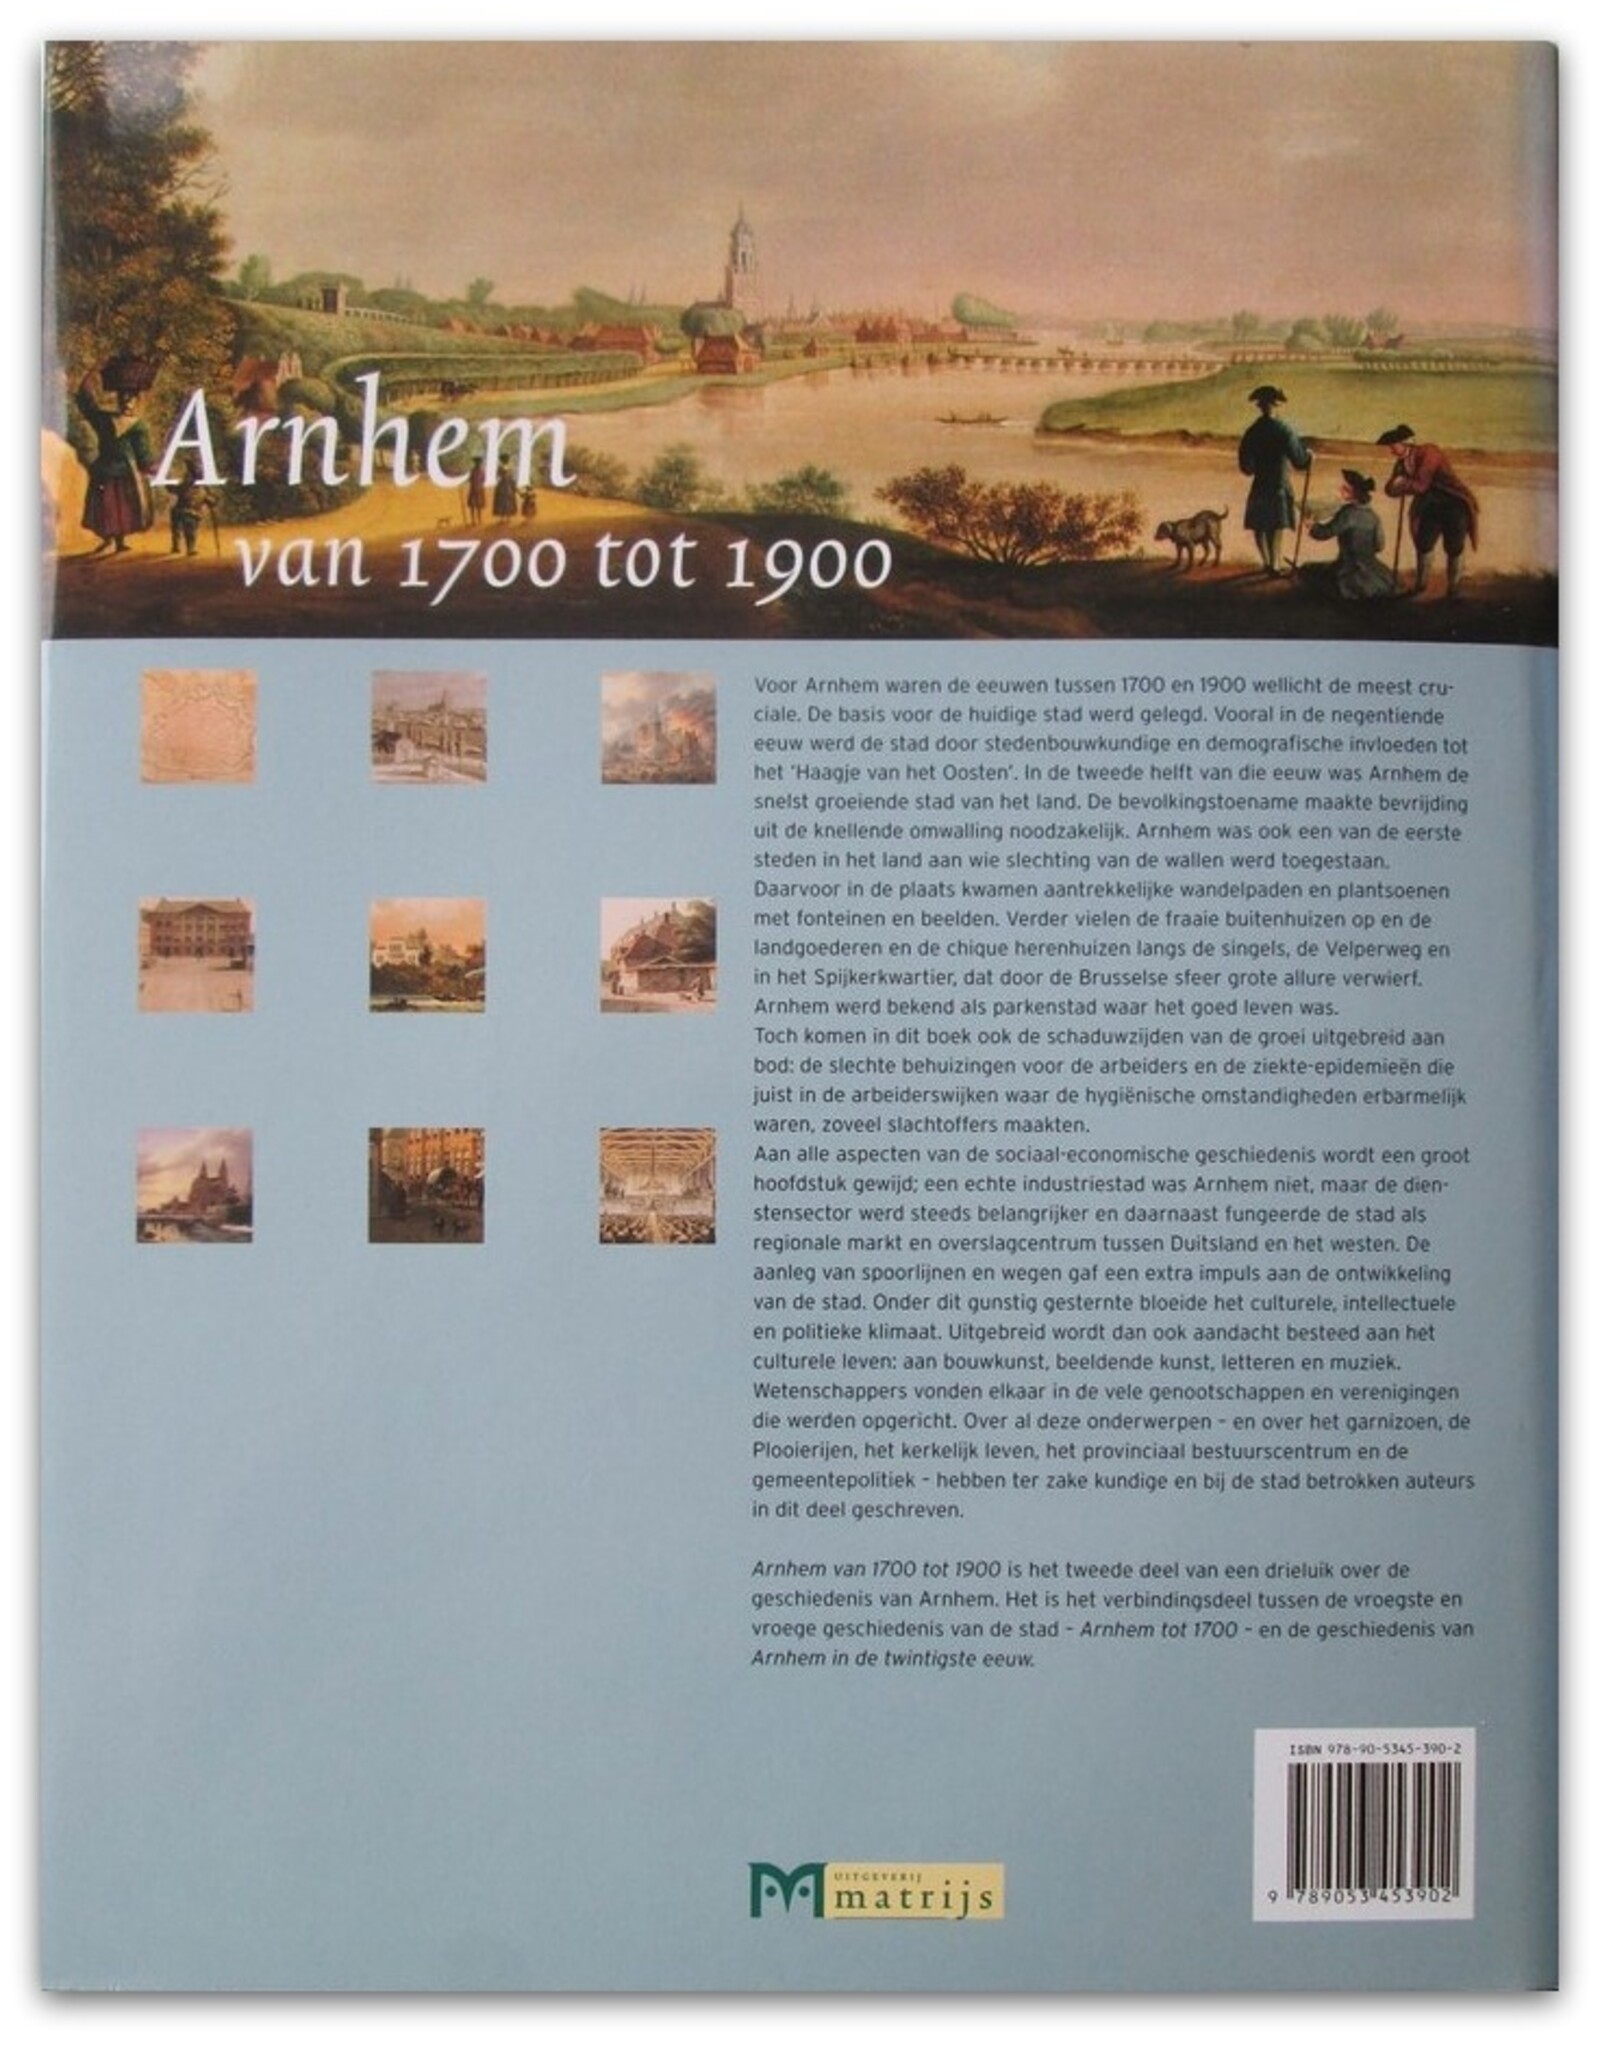 [Matrijs] Frank Keverling Buisman [e.a., red.] - Arnhem van 1700 tot 1900